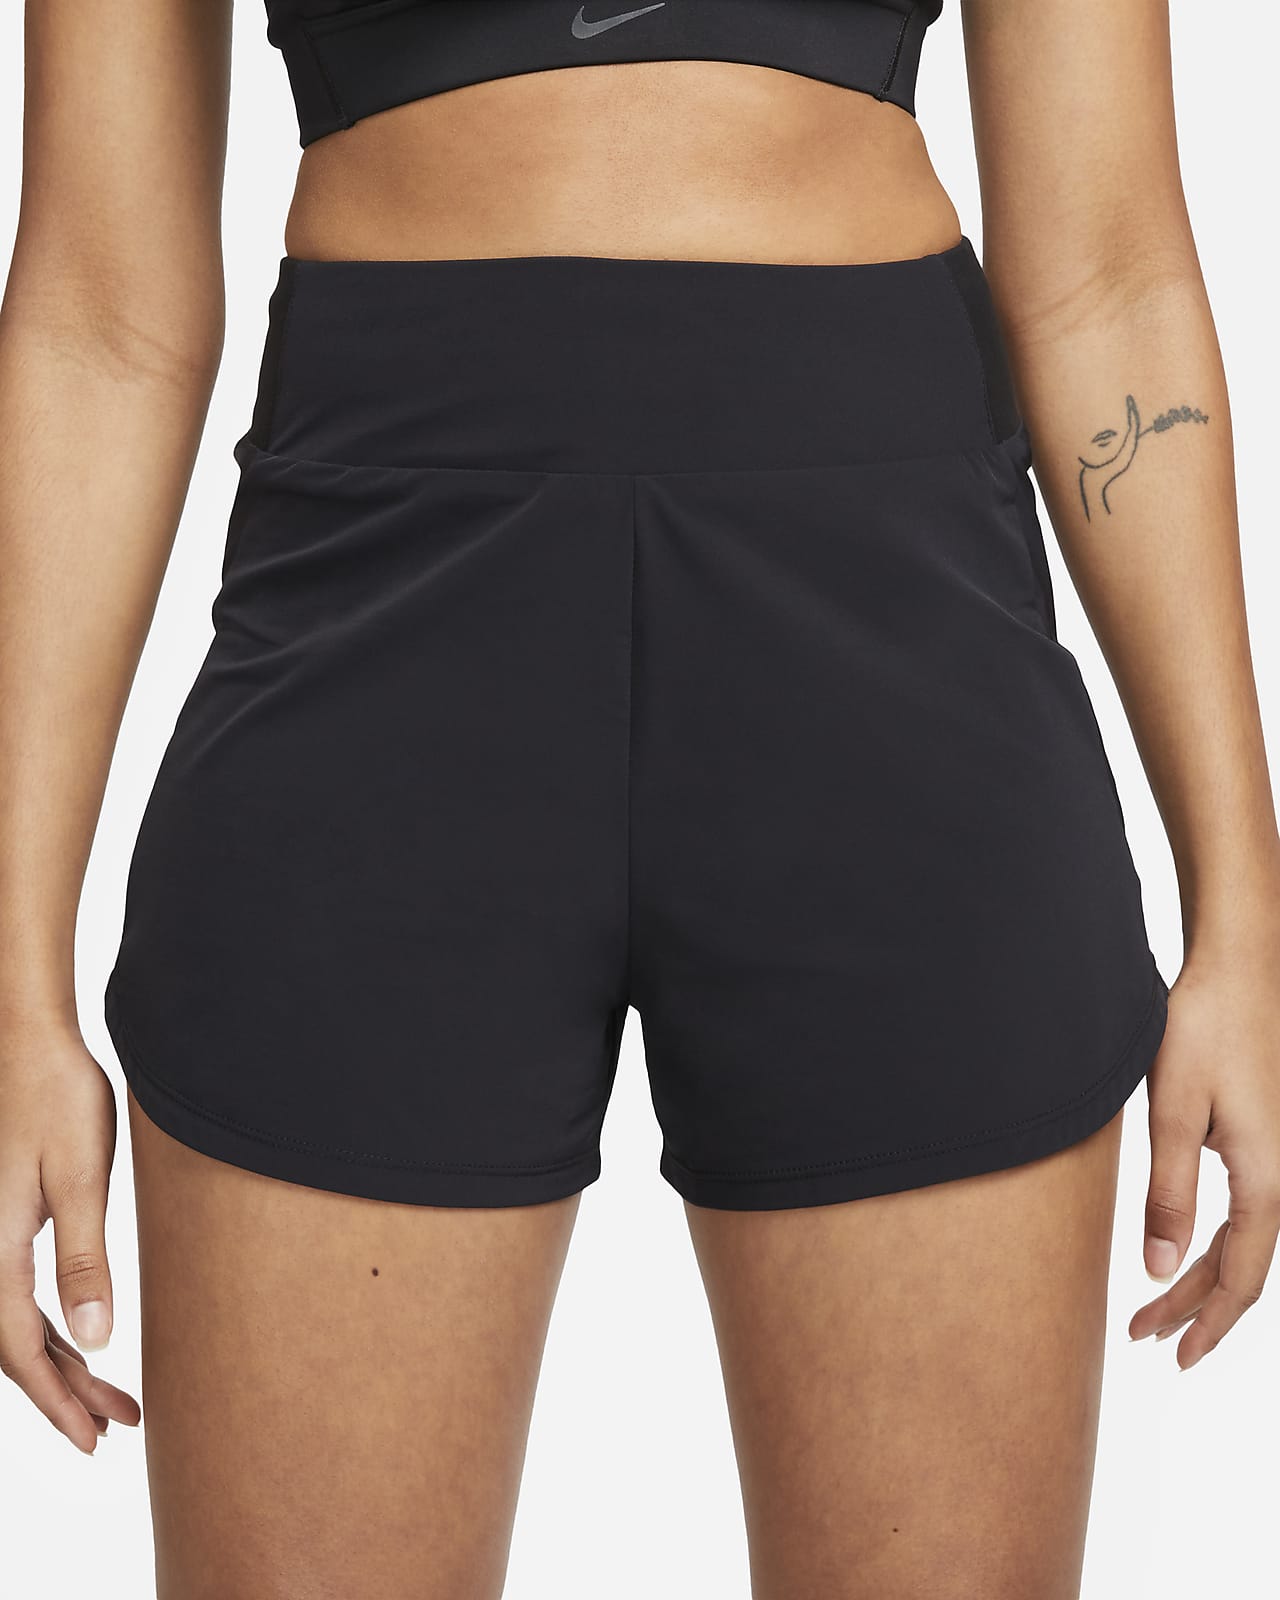 High-waisted mini shorts